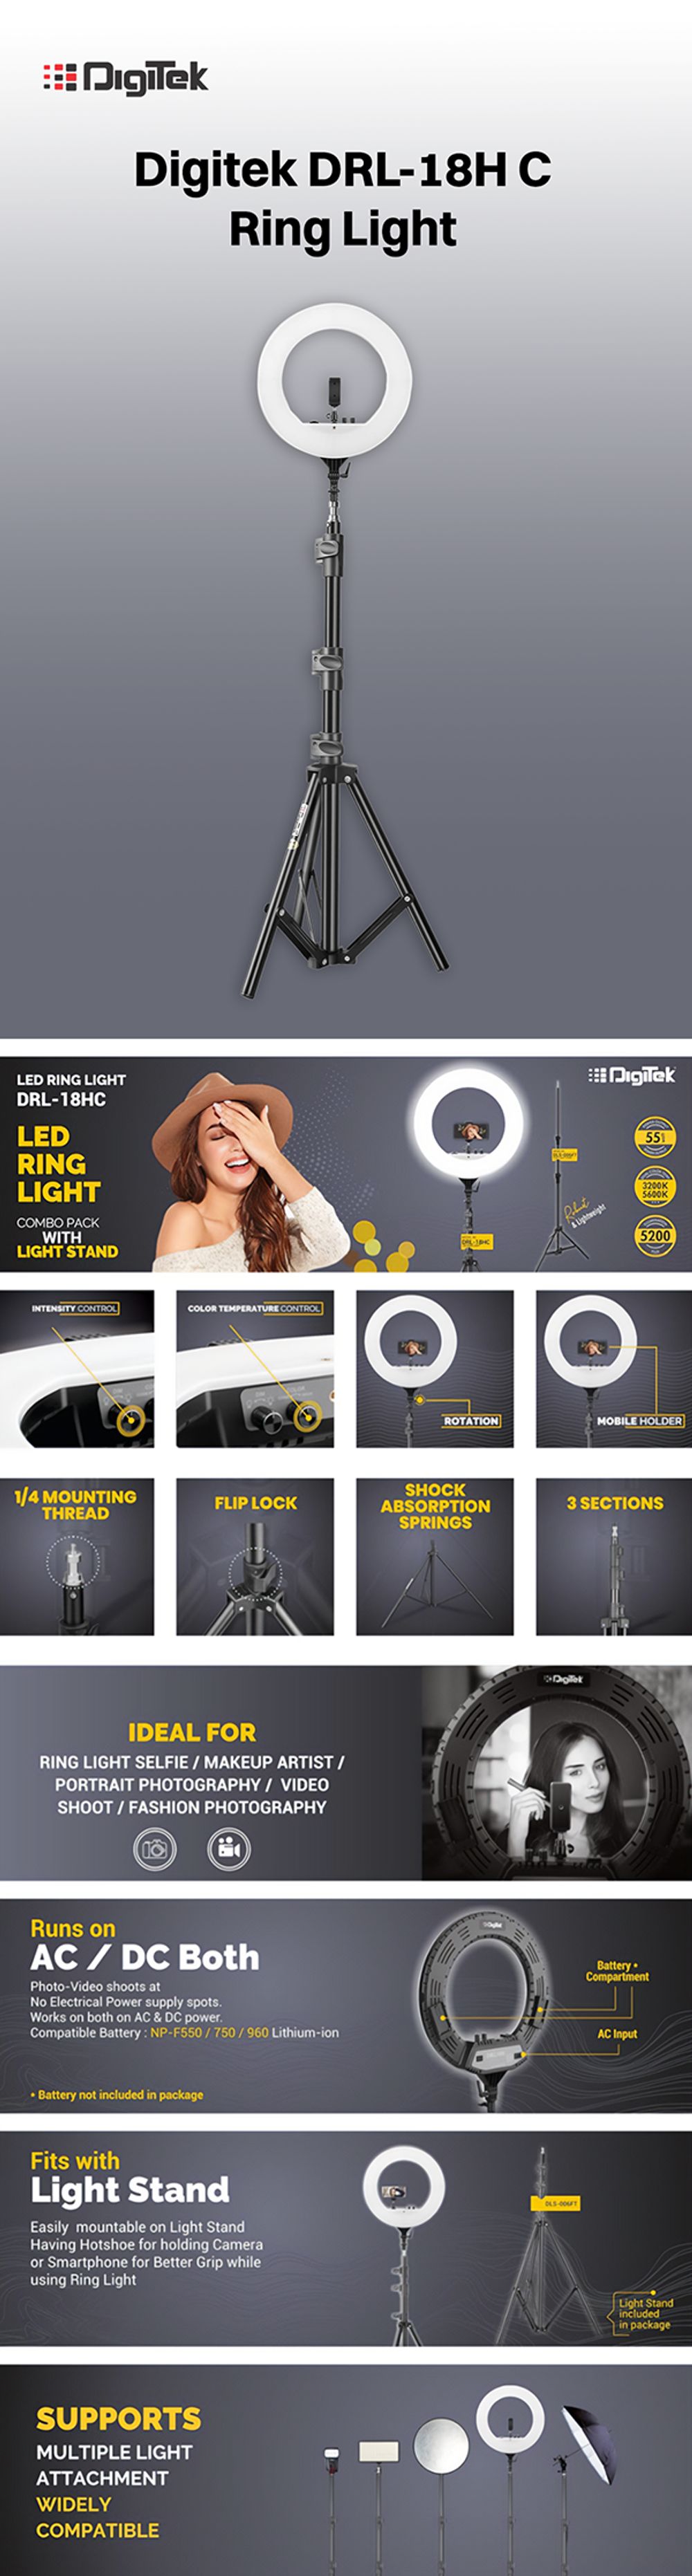 Buy Godox M64 LED Video Light for Photography & Videography (Interlocking  Design) Online - Croma